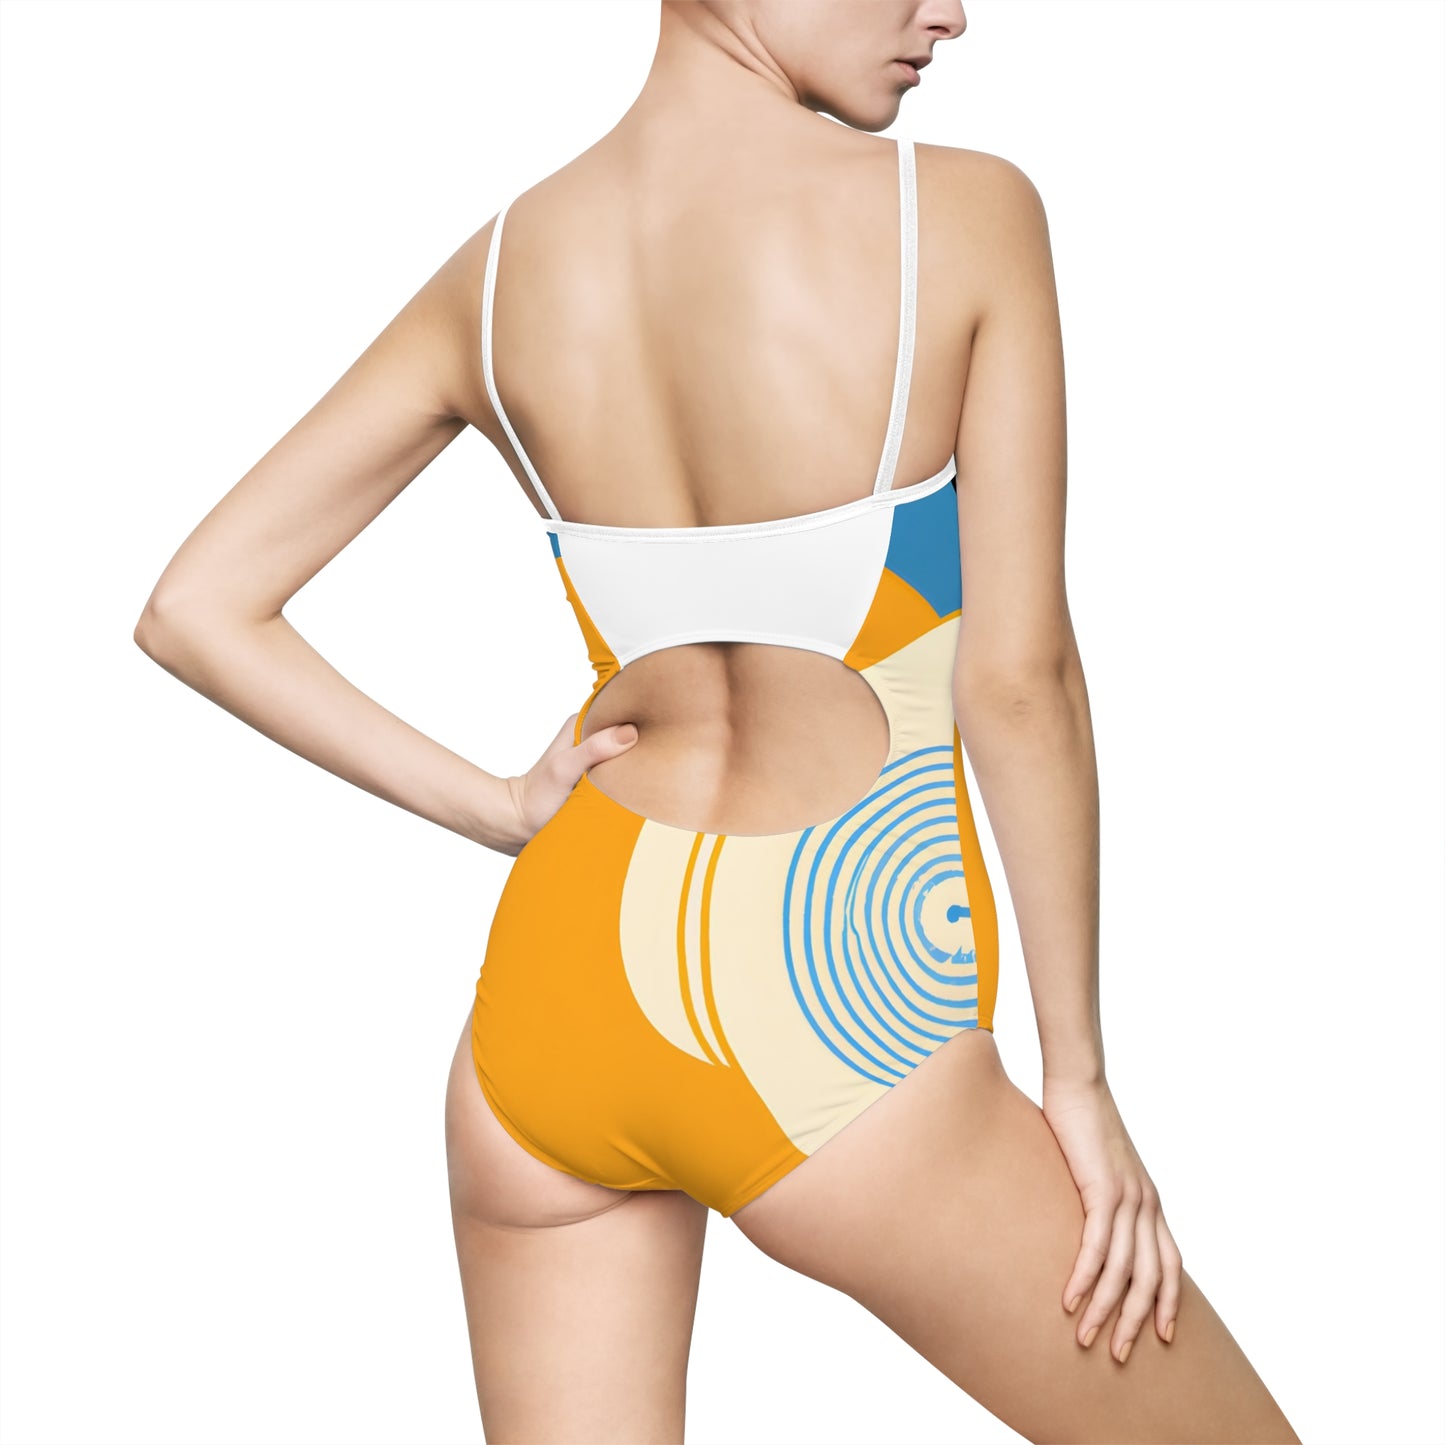 Gestura Millicent - Women's Classic One-Piece Swimsuit